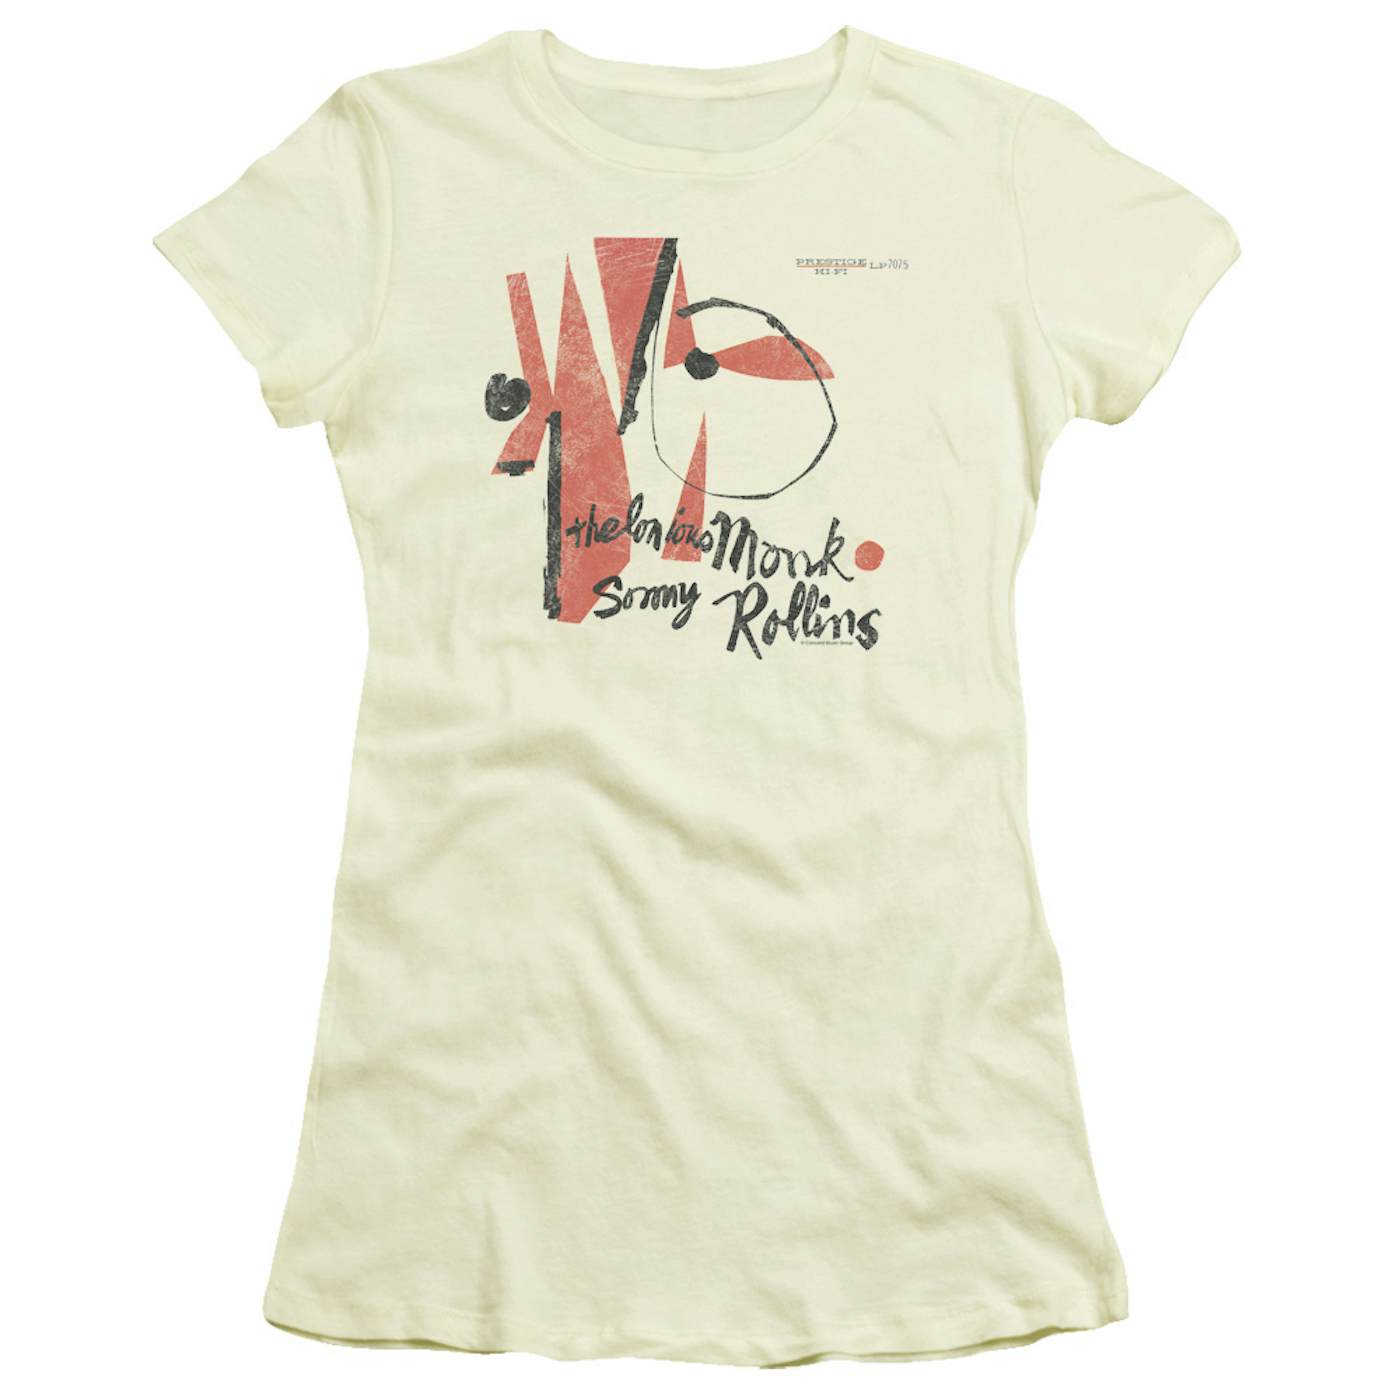 Thelonious Monk Juniors Shirt | MONK SONNY ROLLINS Juniors T Shirt